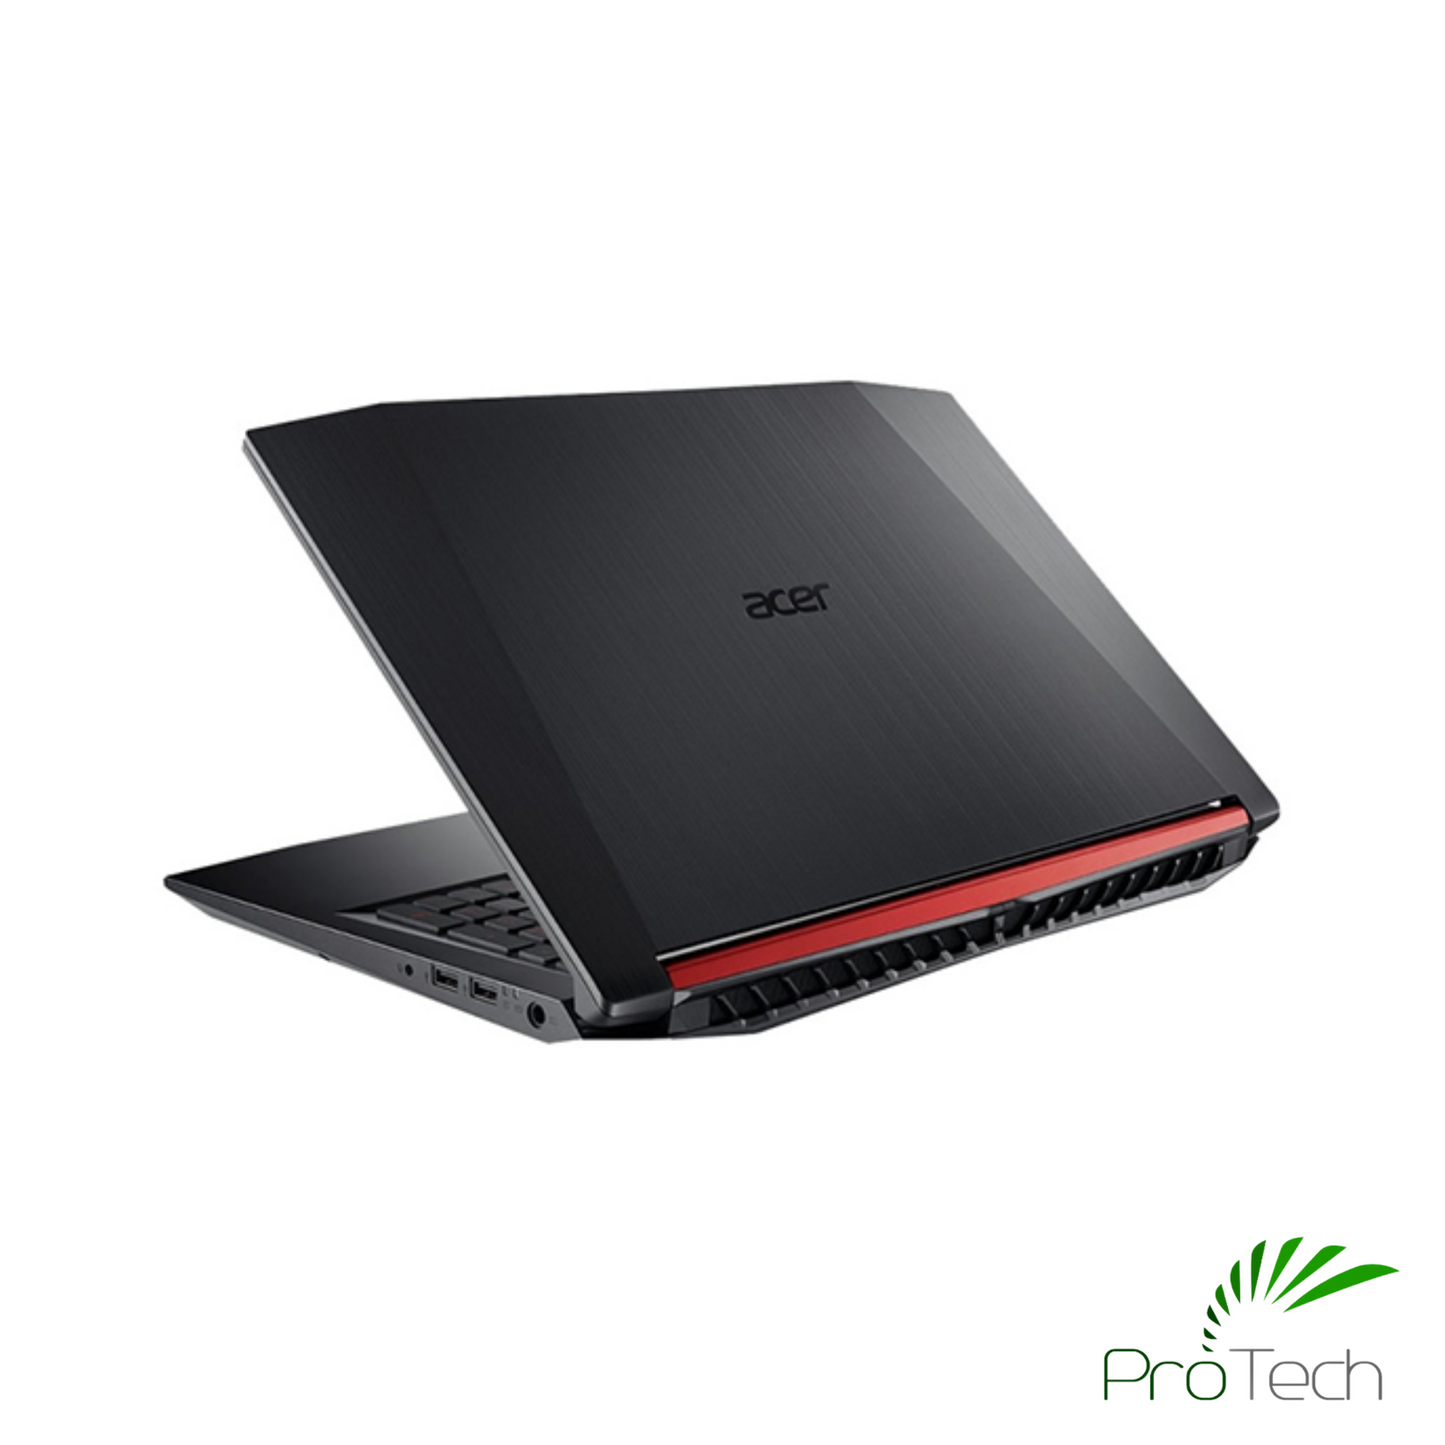 Acer Nitro 5 AN515-43 15.6" Gaming | Ryzen 5 | 16GB RAM | 256GB SSD + 128GB SSD | RX 560